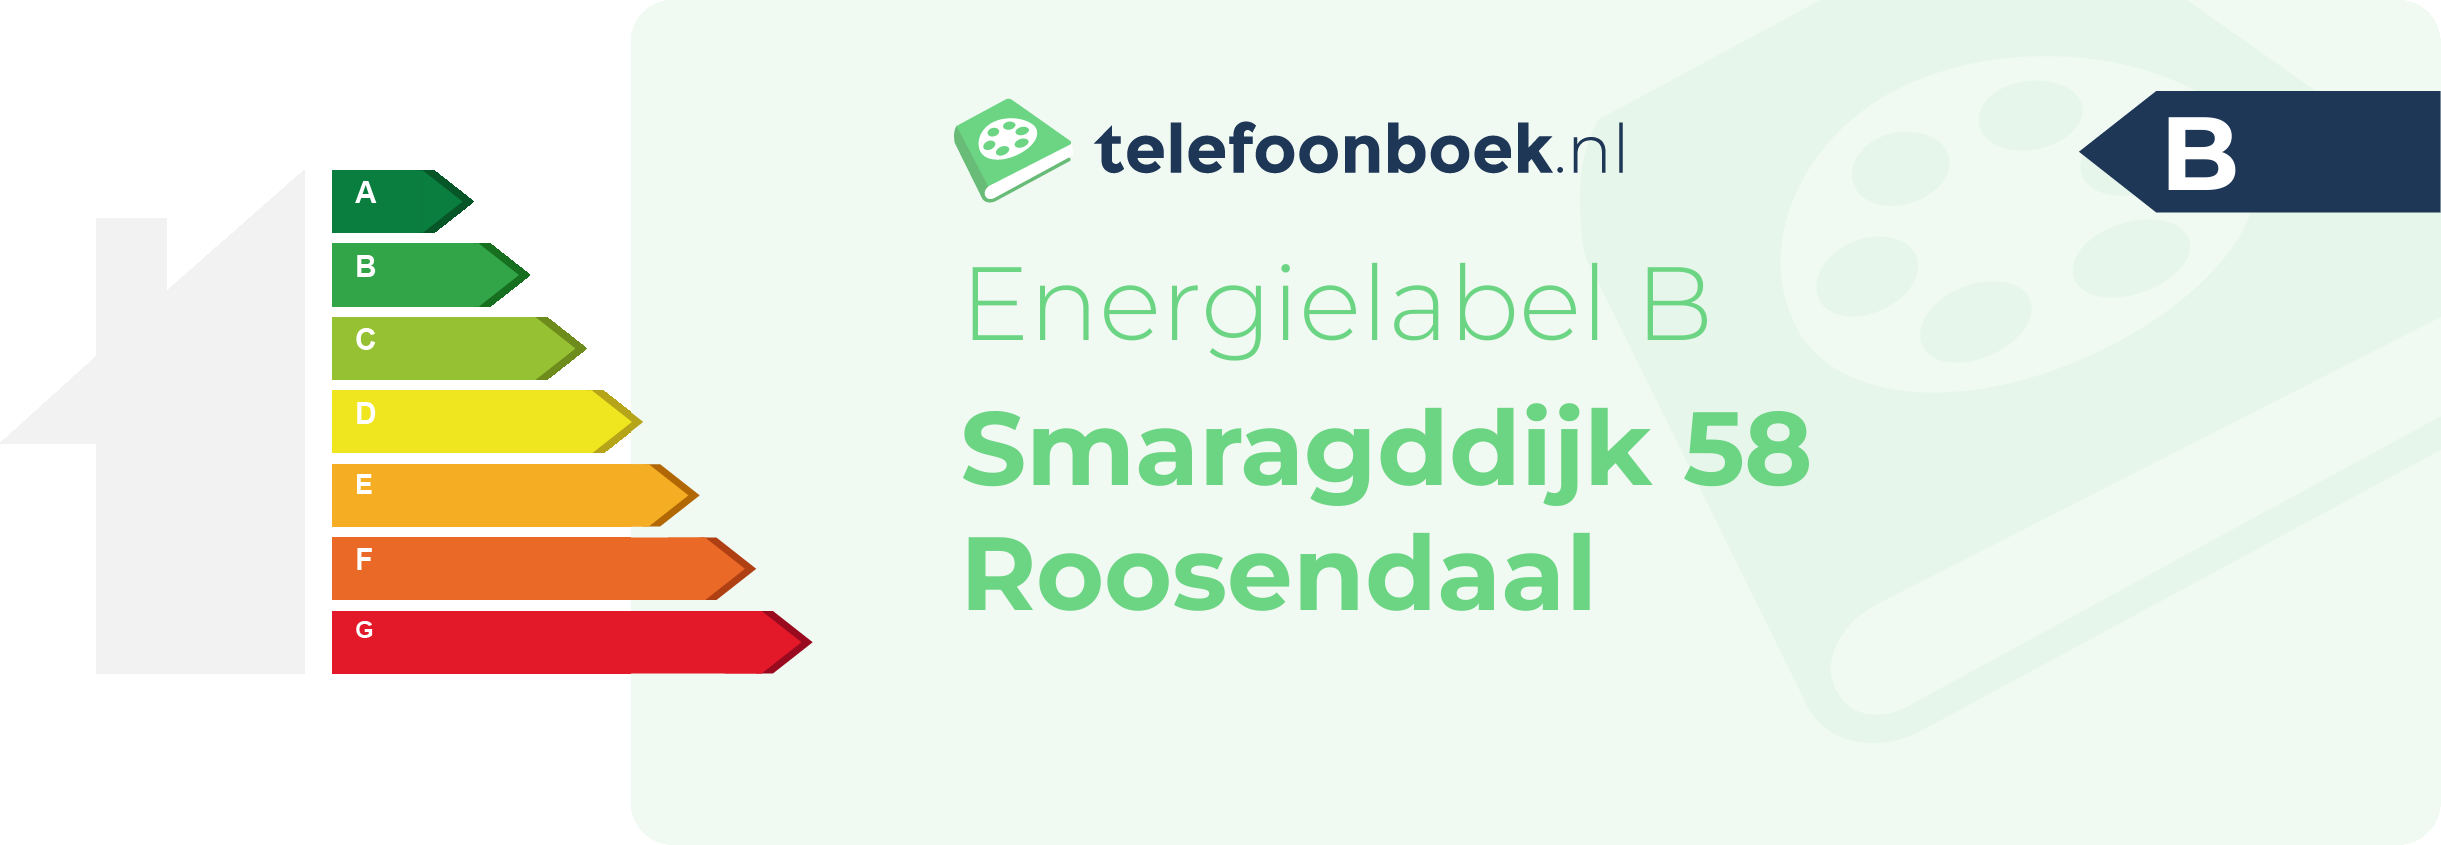 Energielabel Smaragddijk 58 Roosendaal